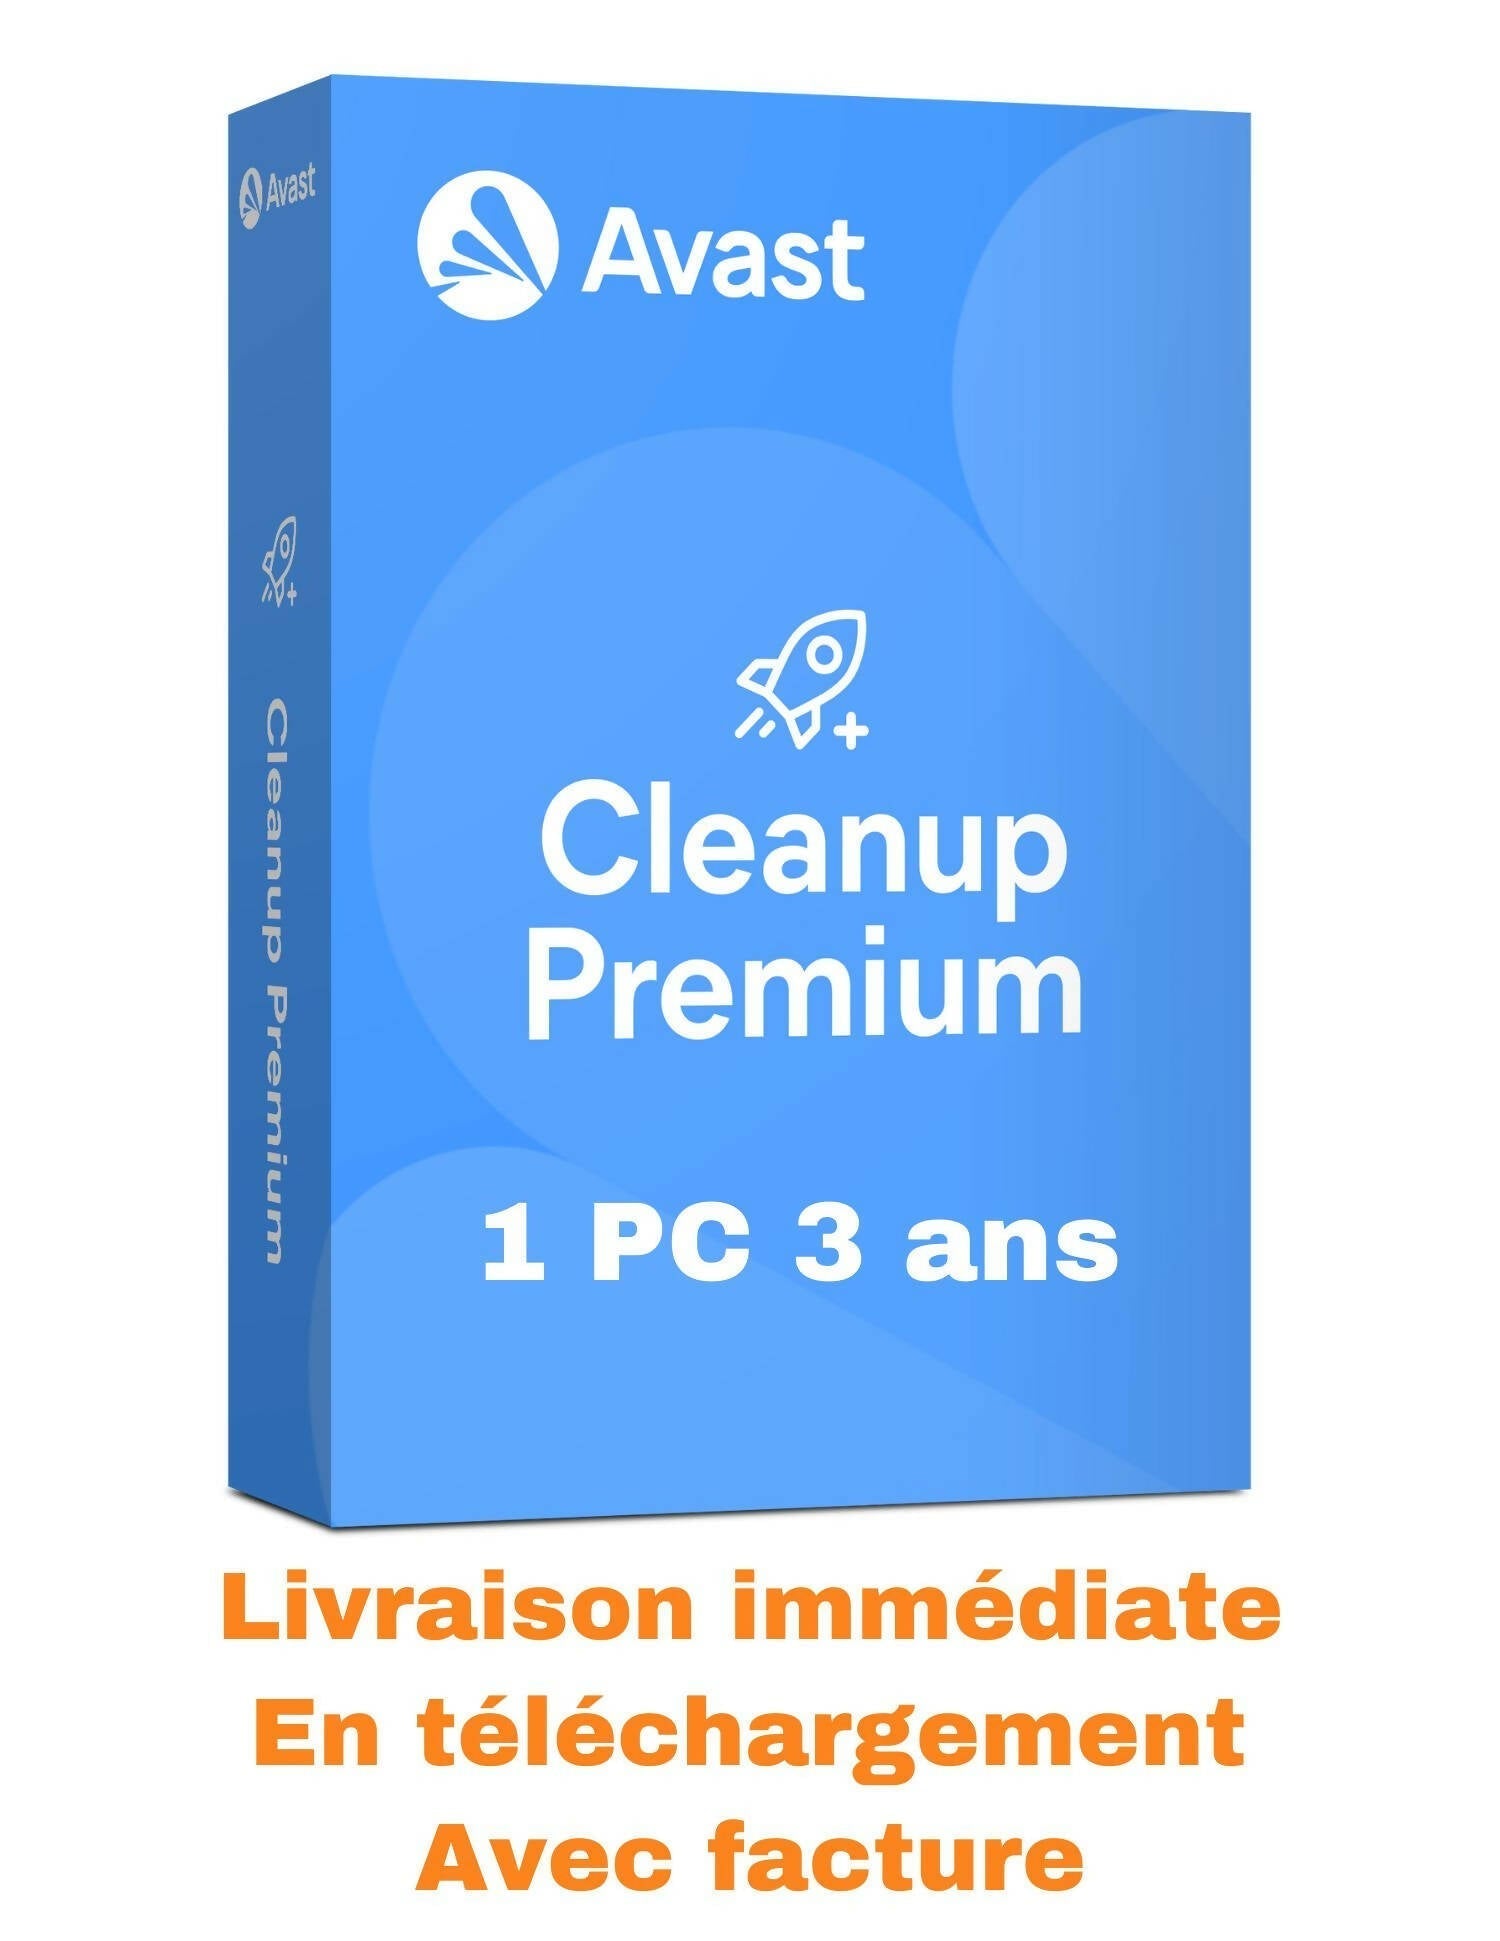 Avast Cleanup Premium 1 PC 3 ans clicktofournisseur.com